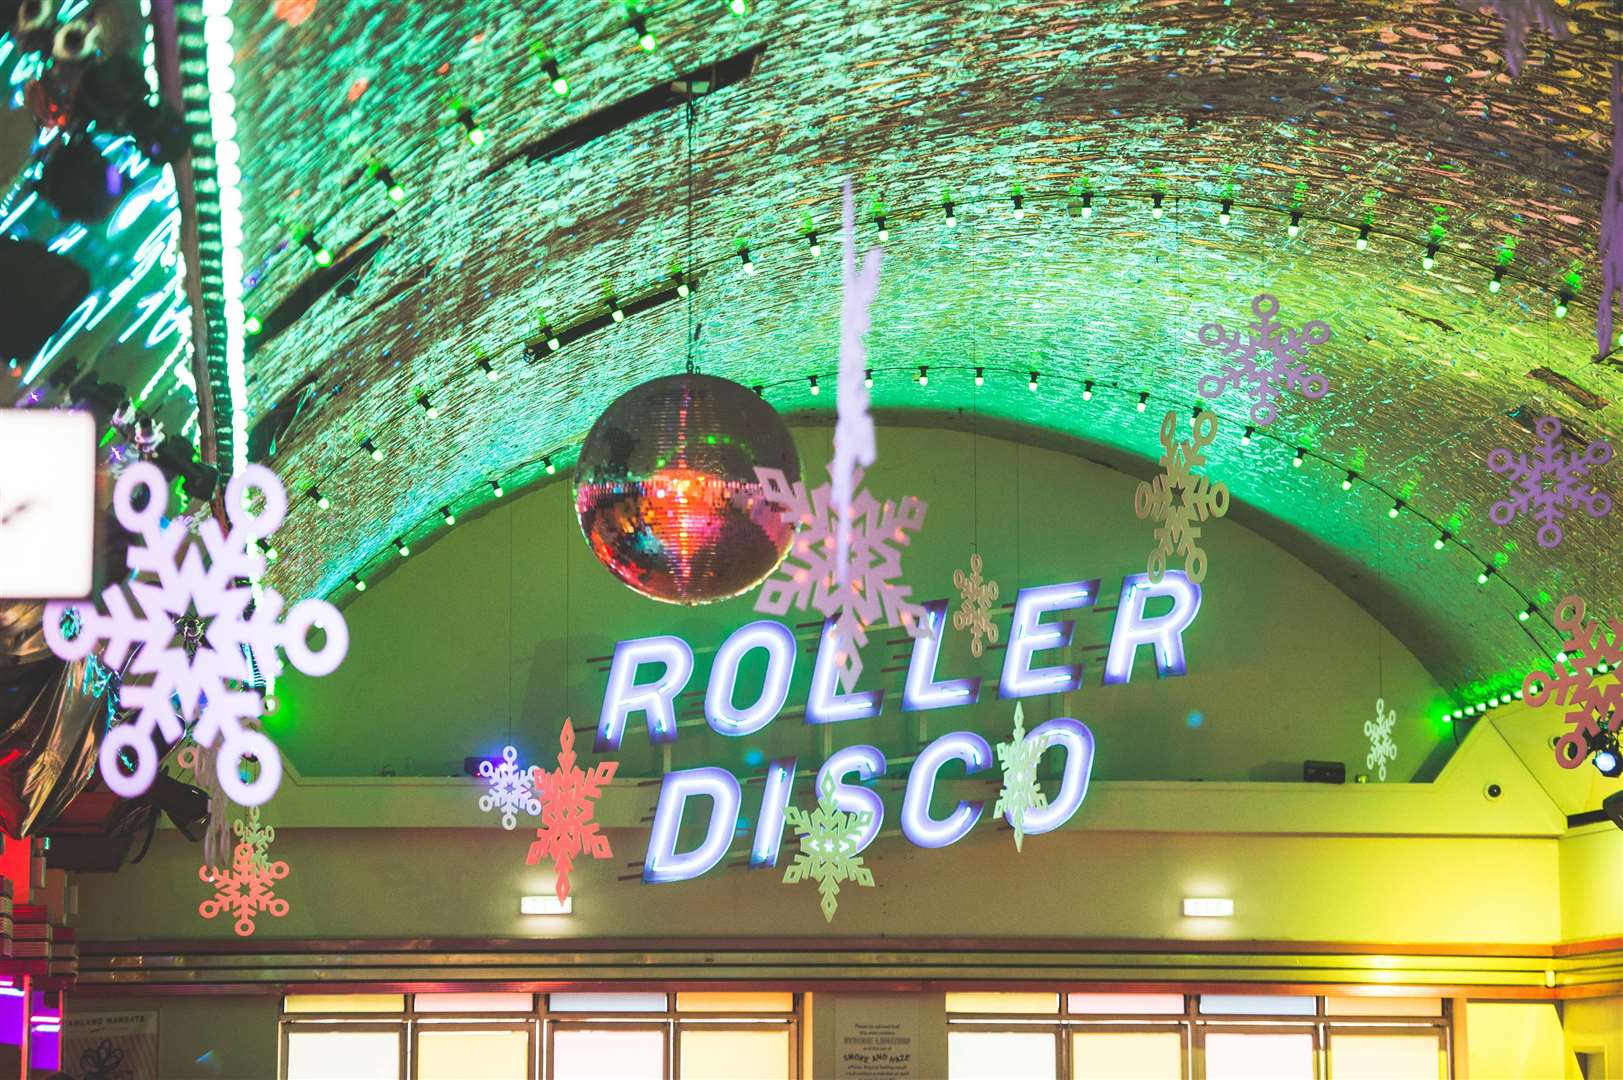 Dreamland's Roller Disco will be a festive affair